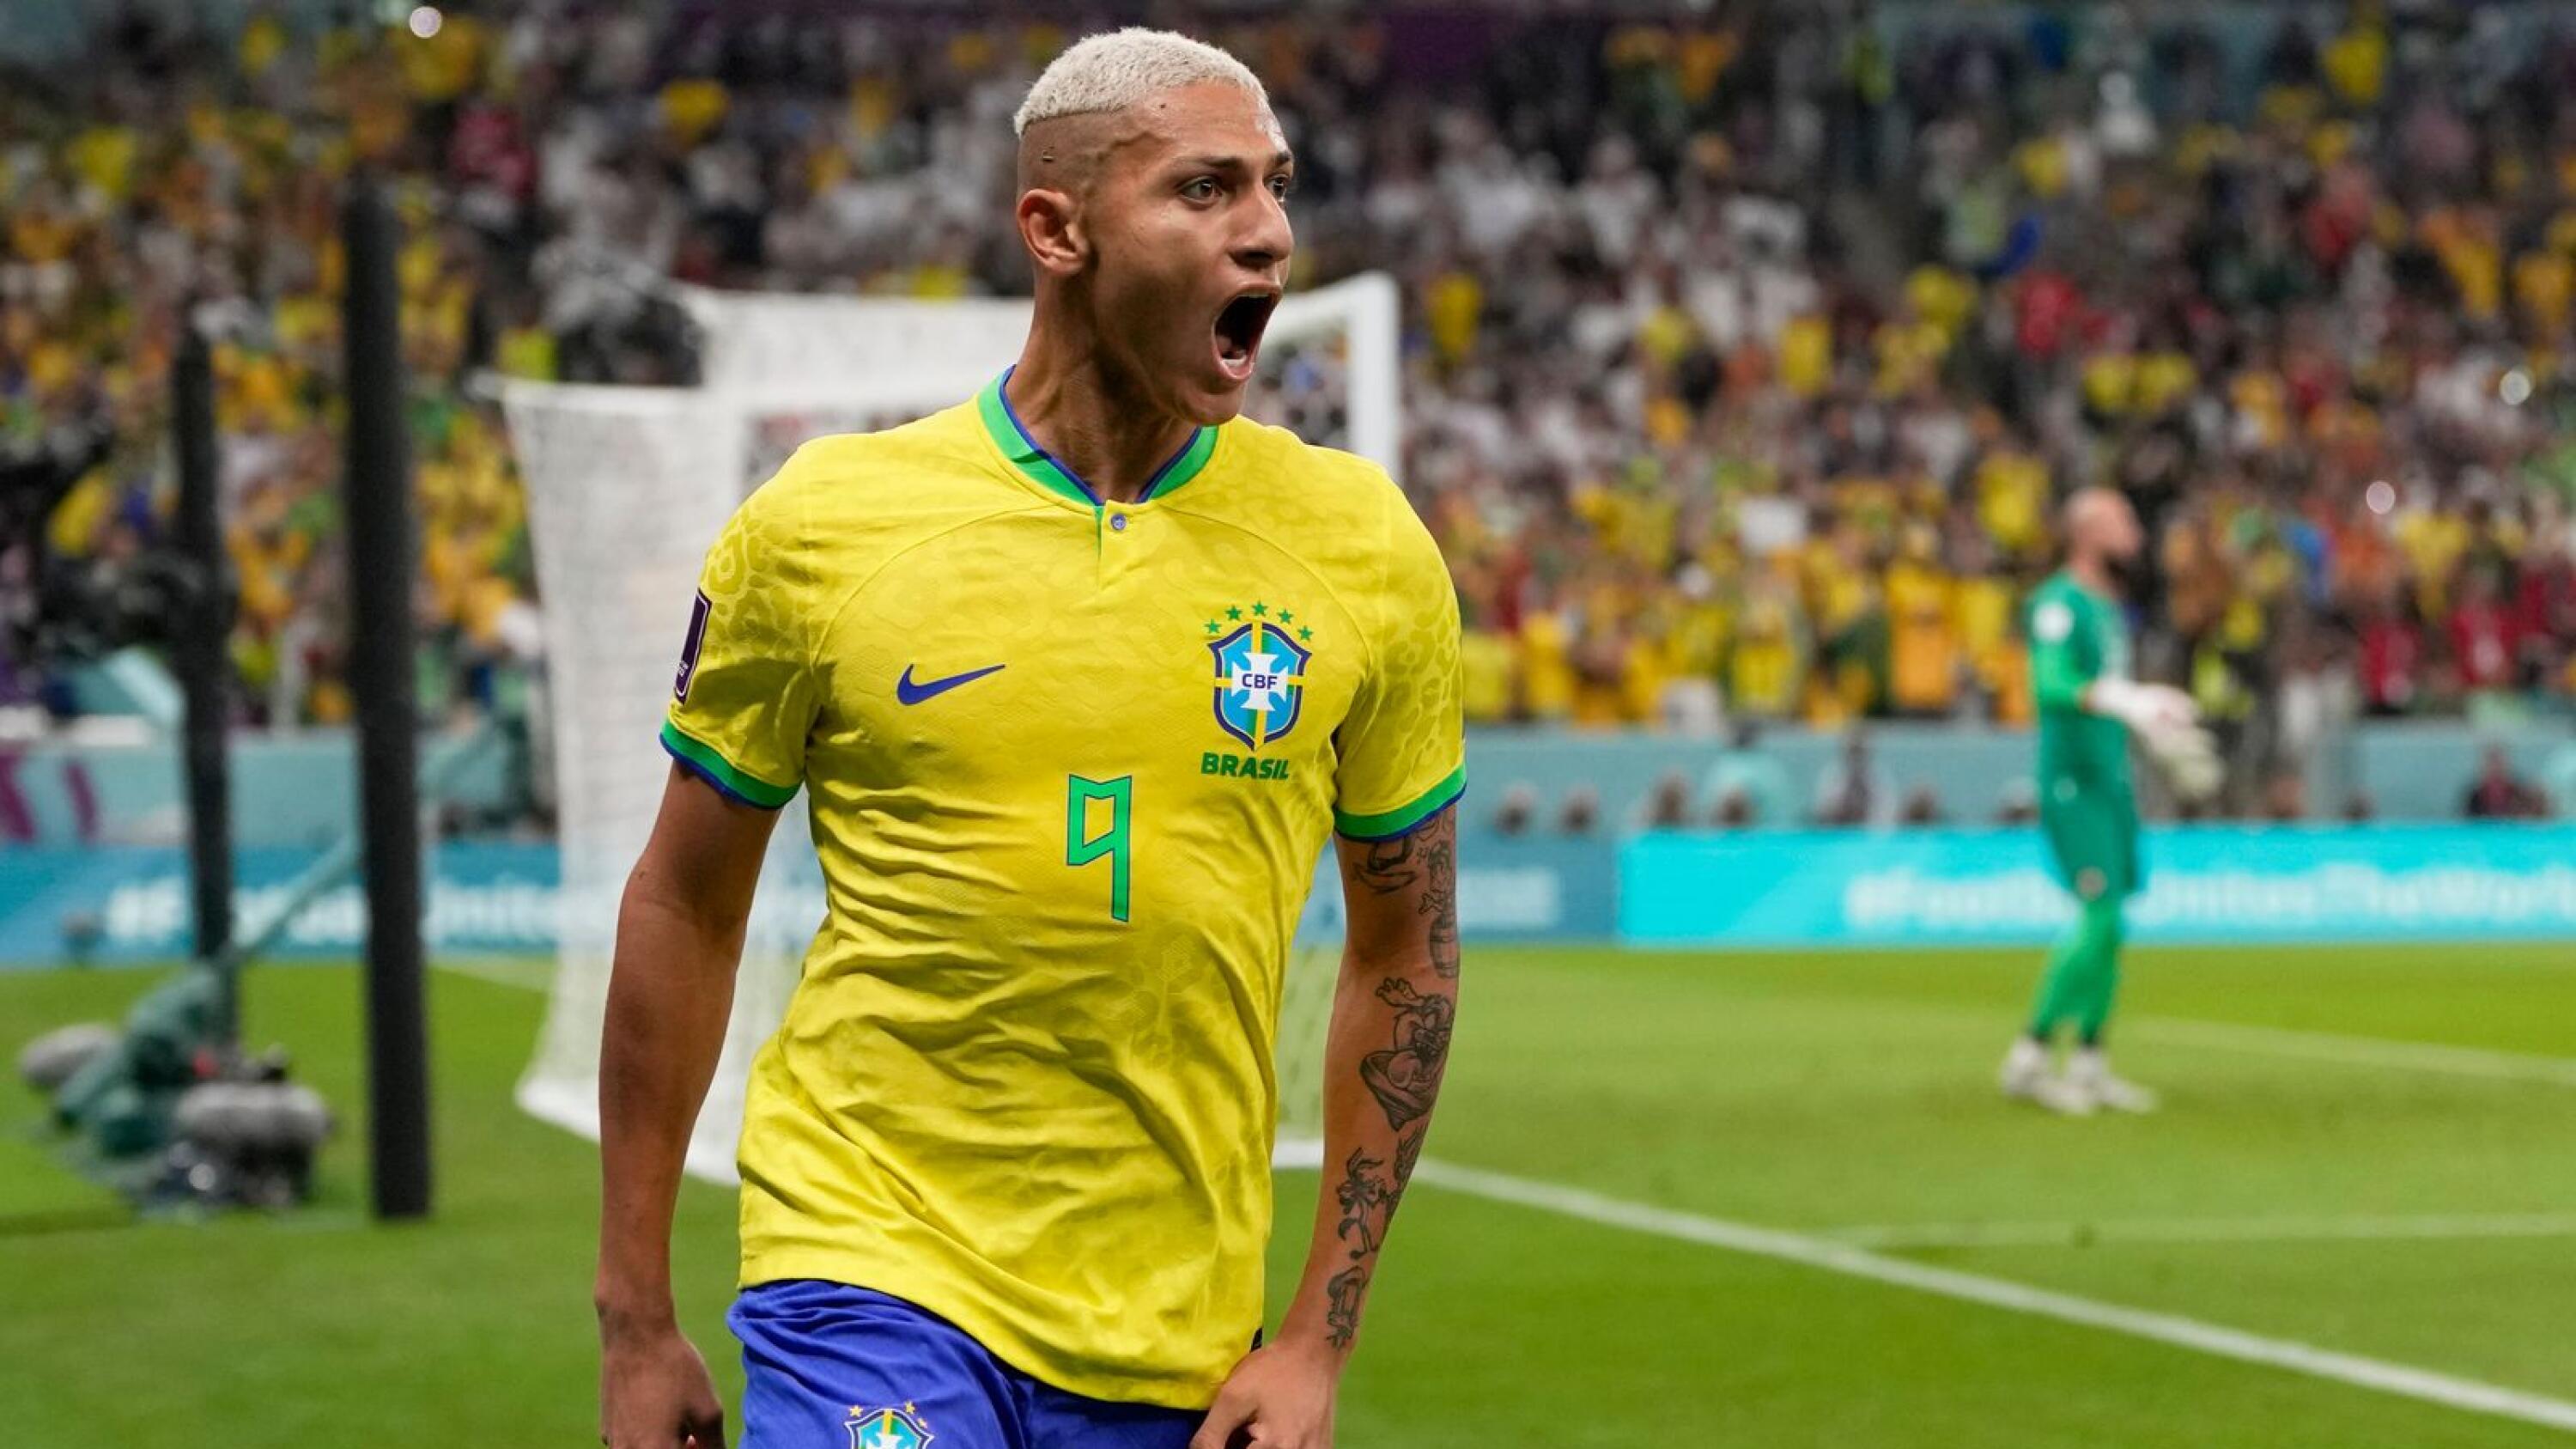 Neymar scores 78th, 79th goals to surpass Pelé and break Brazil's